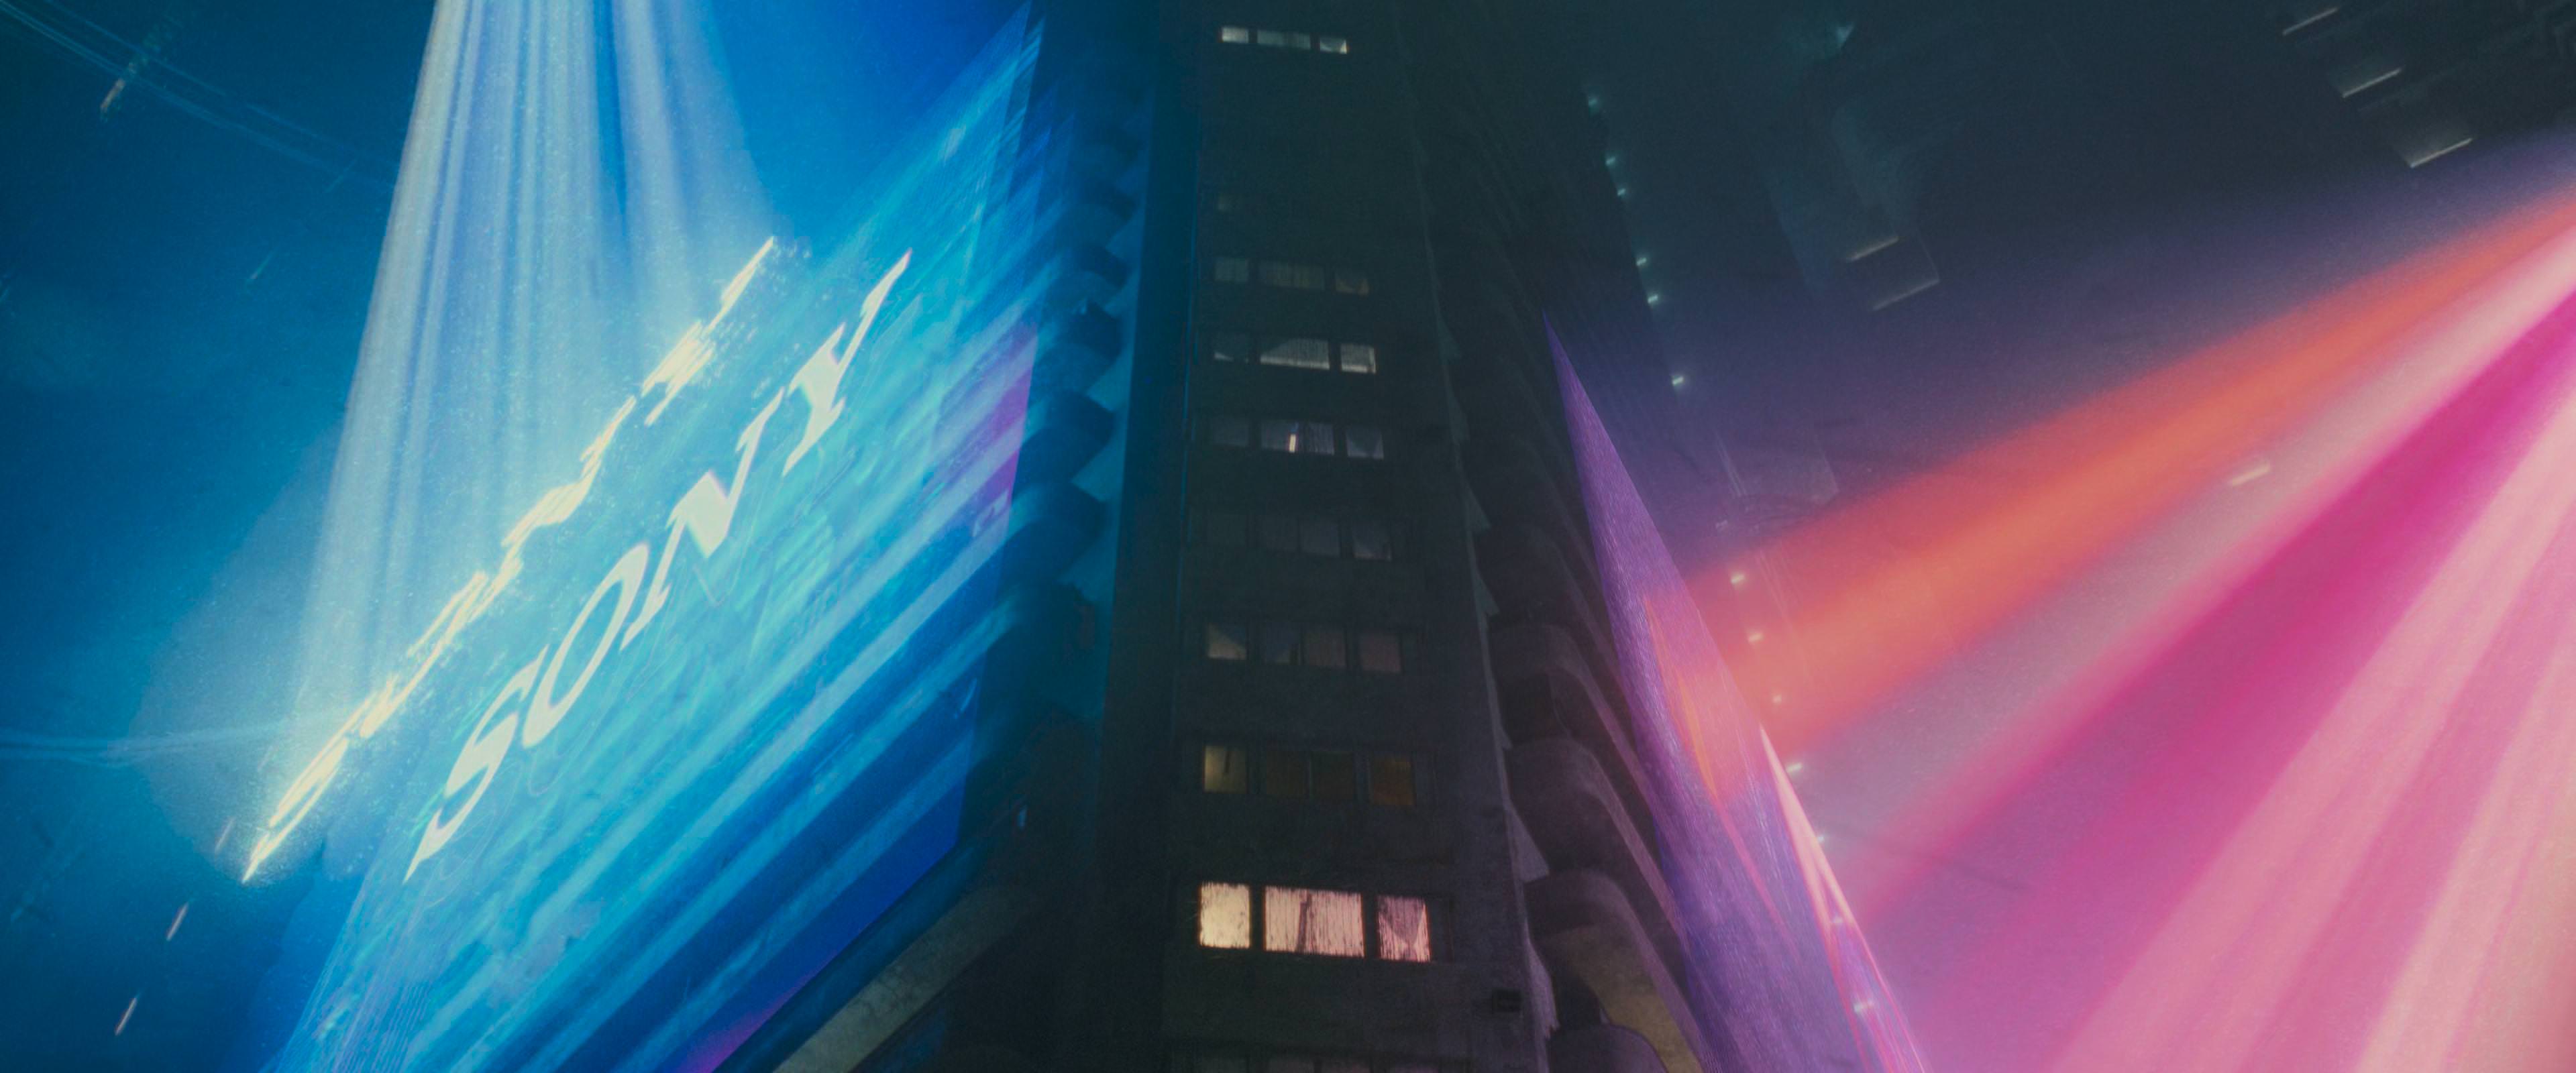 Blade Runner 2049 4K Wallpapers - Top Free Blade Runner 2049 4K